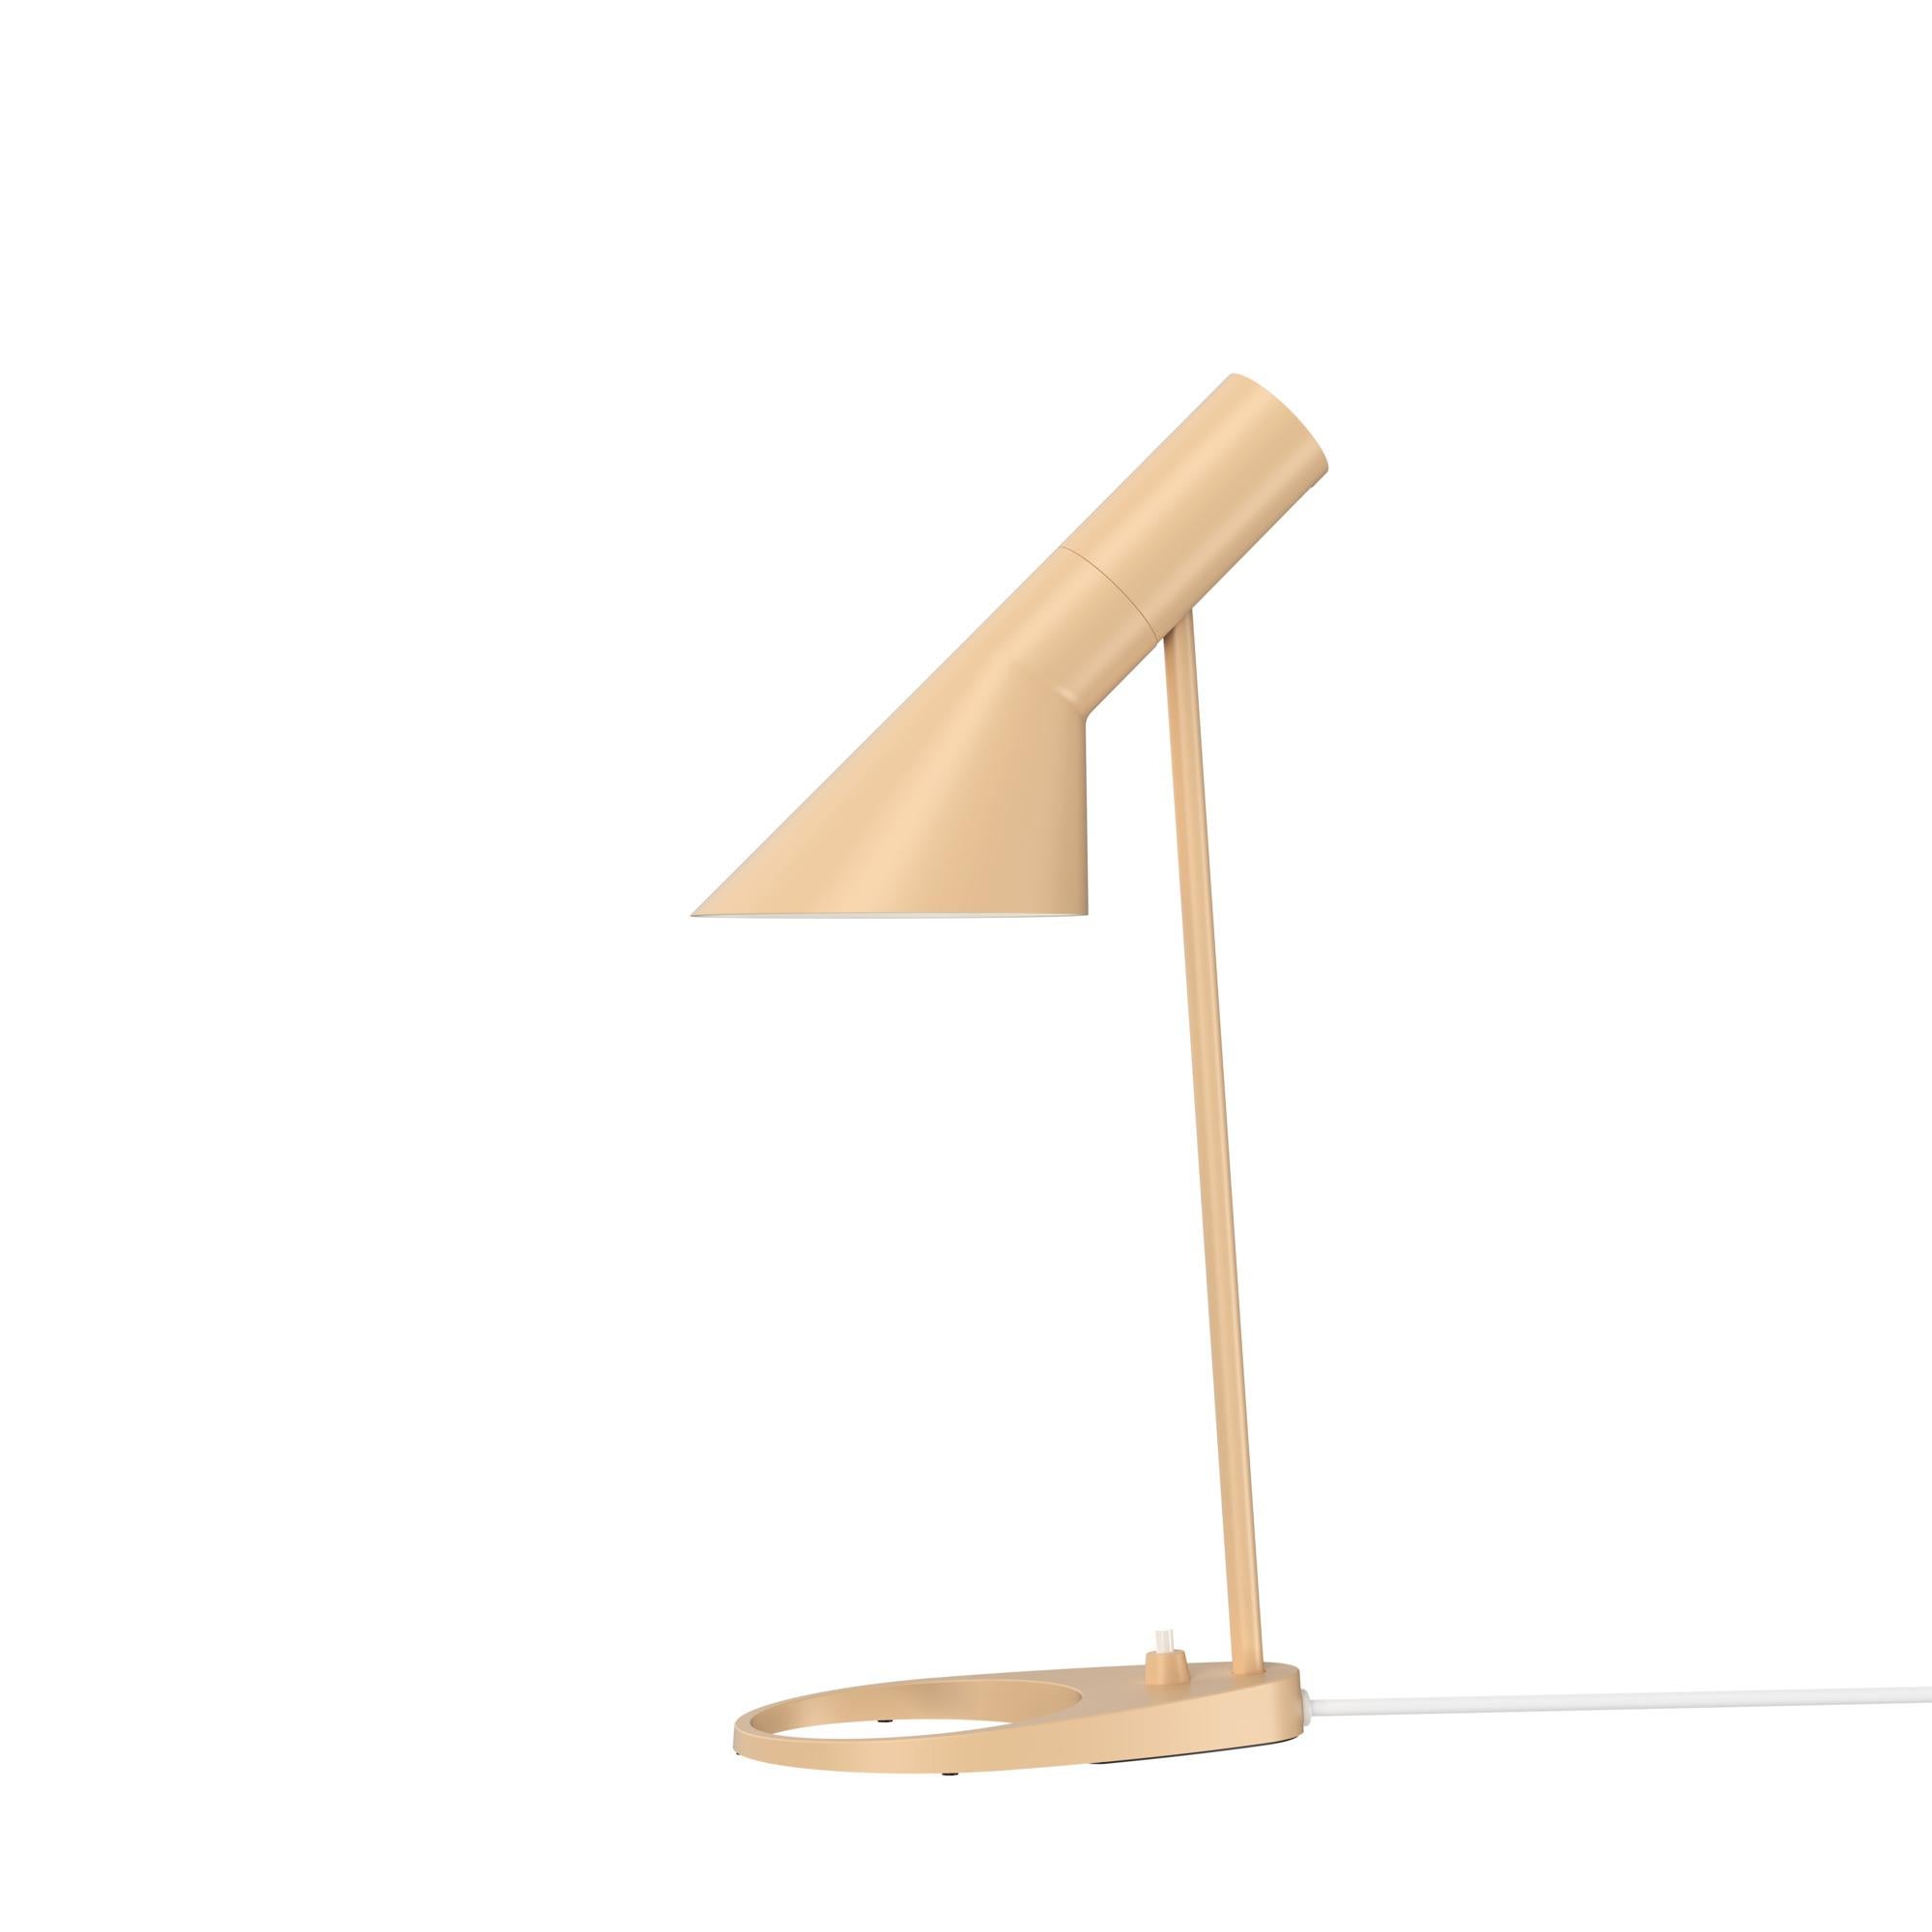 Arne Jacobsen 'AJ Mini' Table Lamp in Stainless Steel for Louis Poulsen For Sale 8